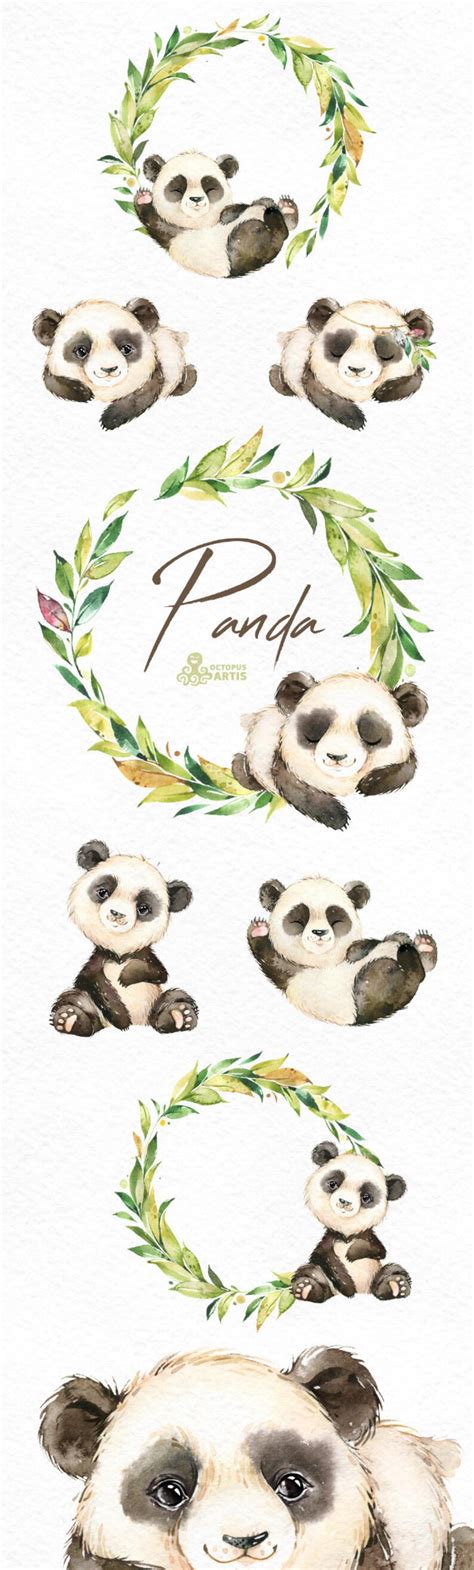 Panda Watercolor Little Animal Clipart Floral Wreath Etsy